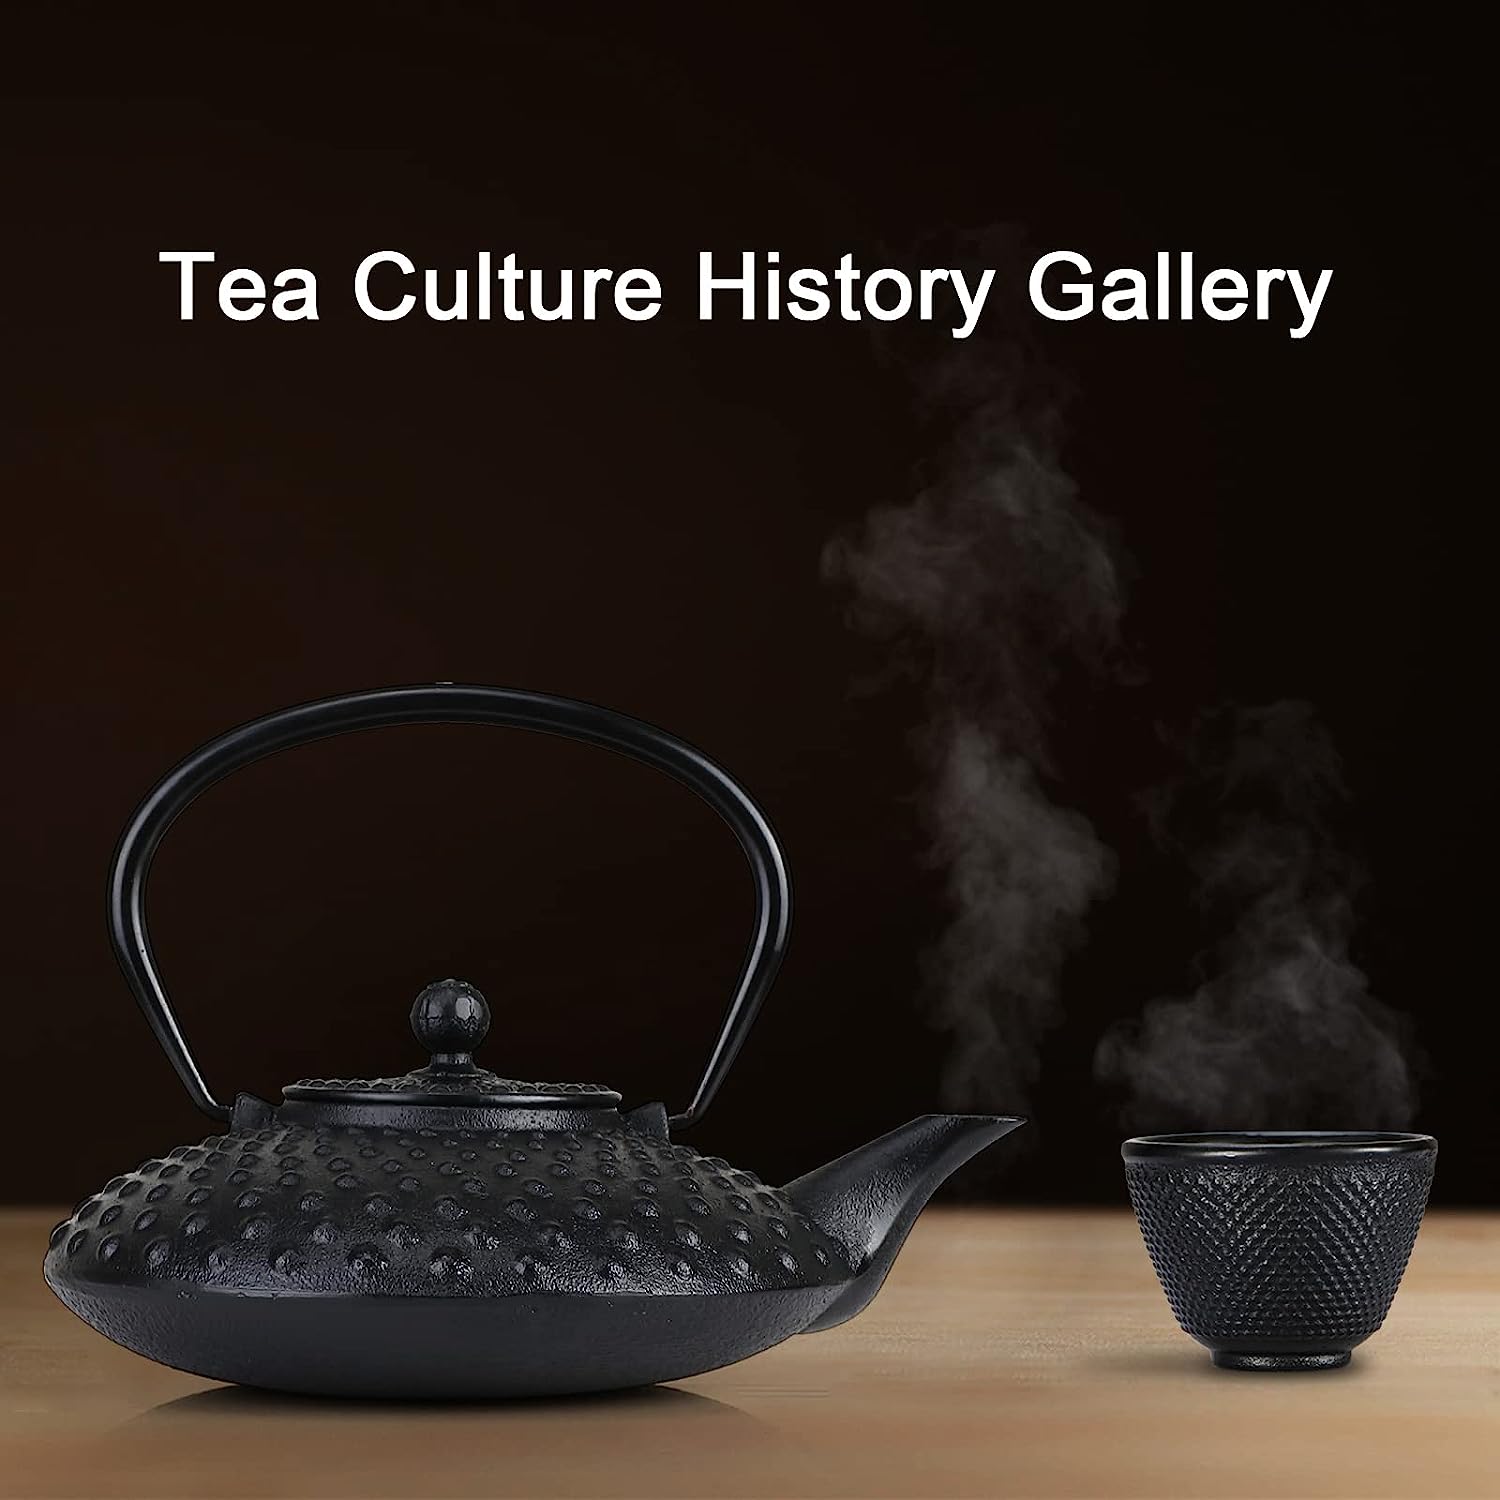 Unbekannt Tea for One Tea Set 3-Piece Porcelain Teapot Teacup and Saucer Black White Stripes 